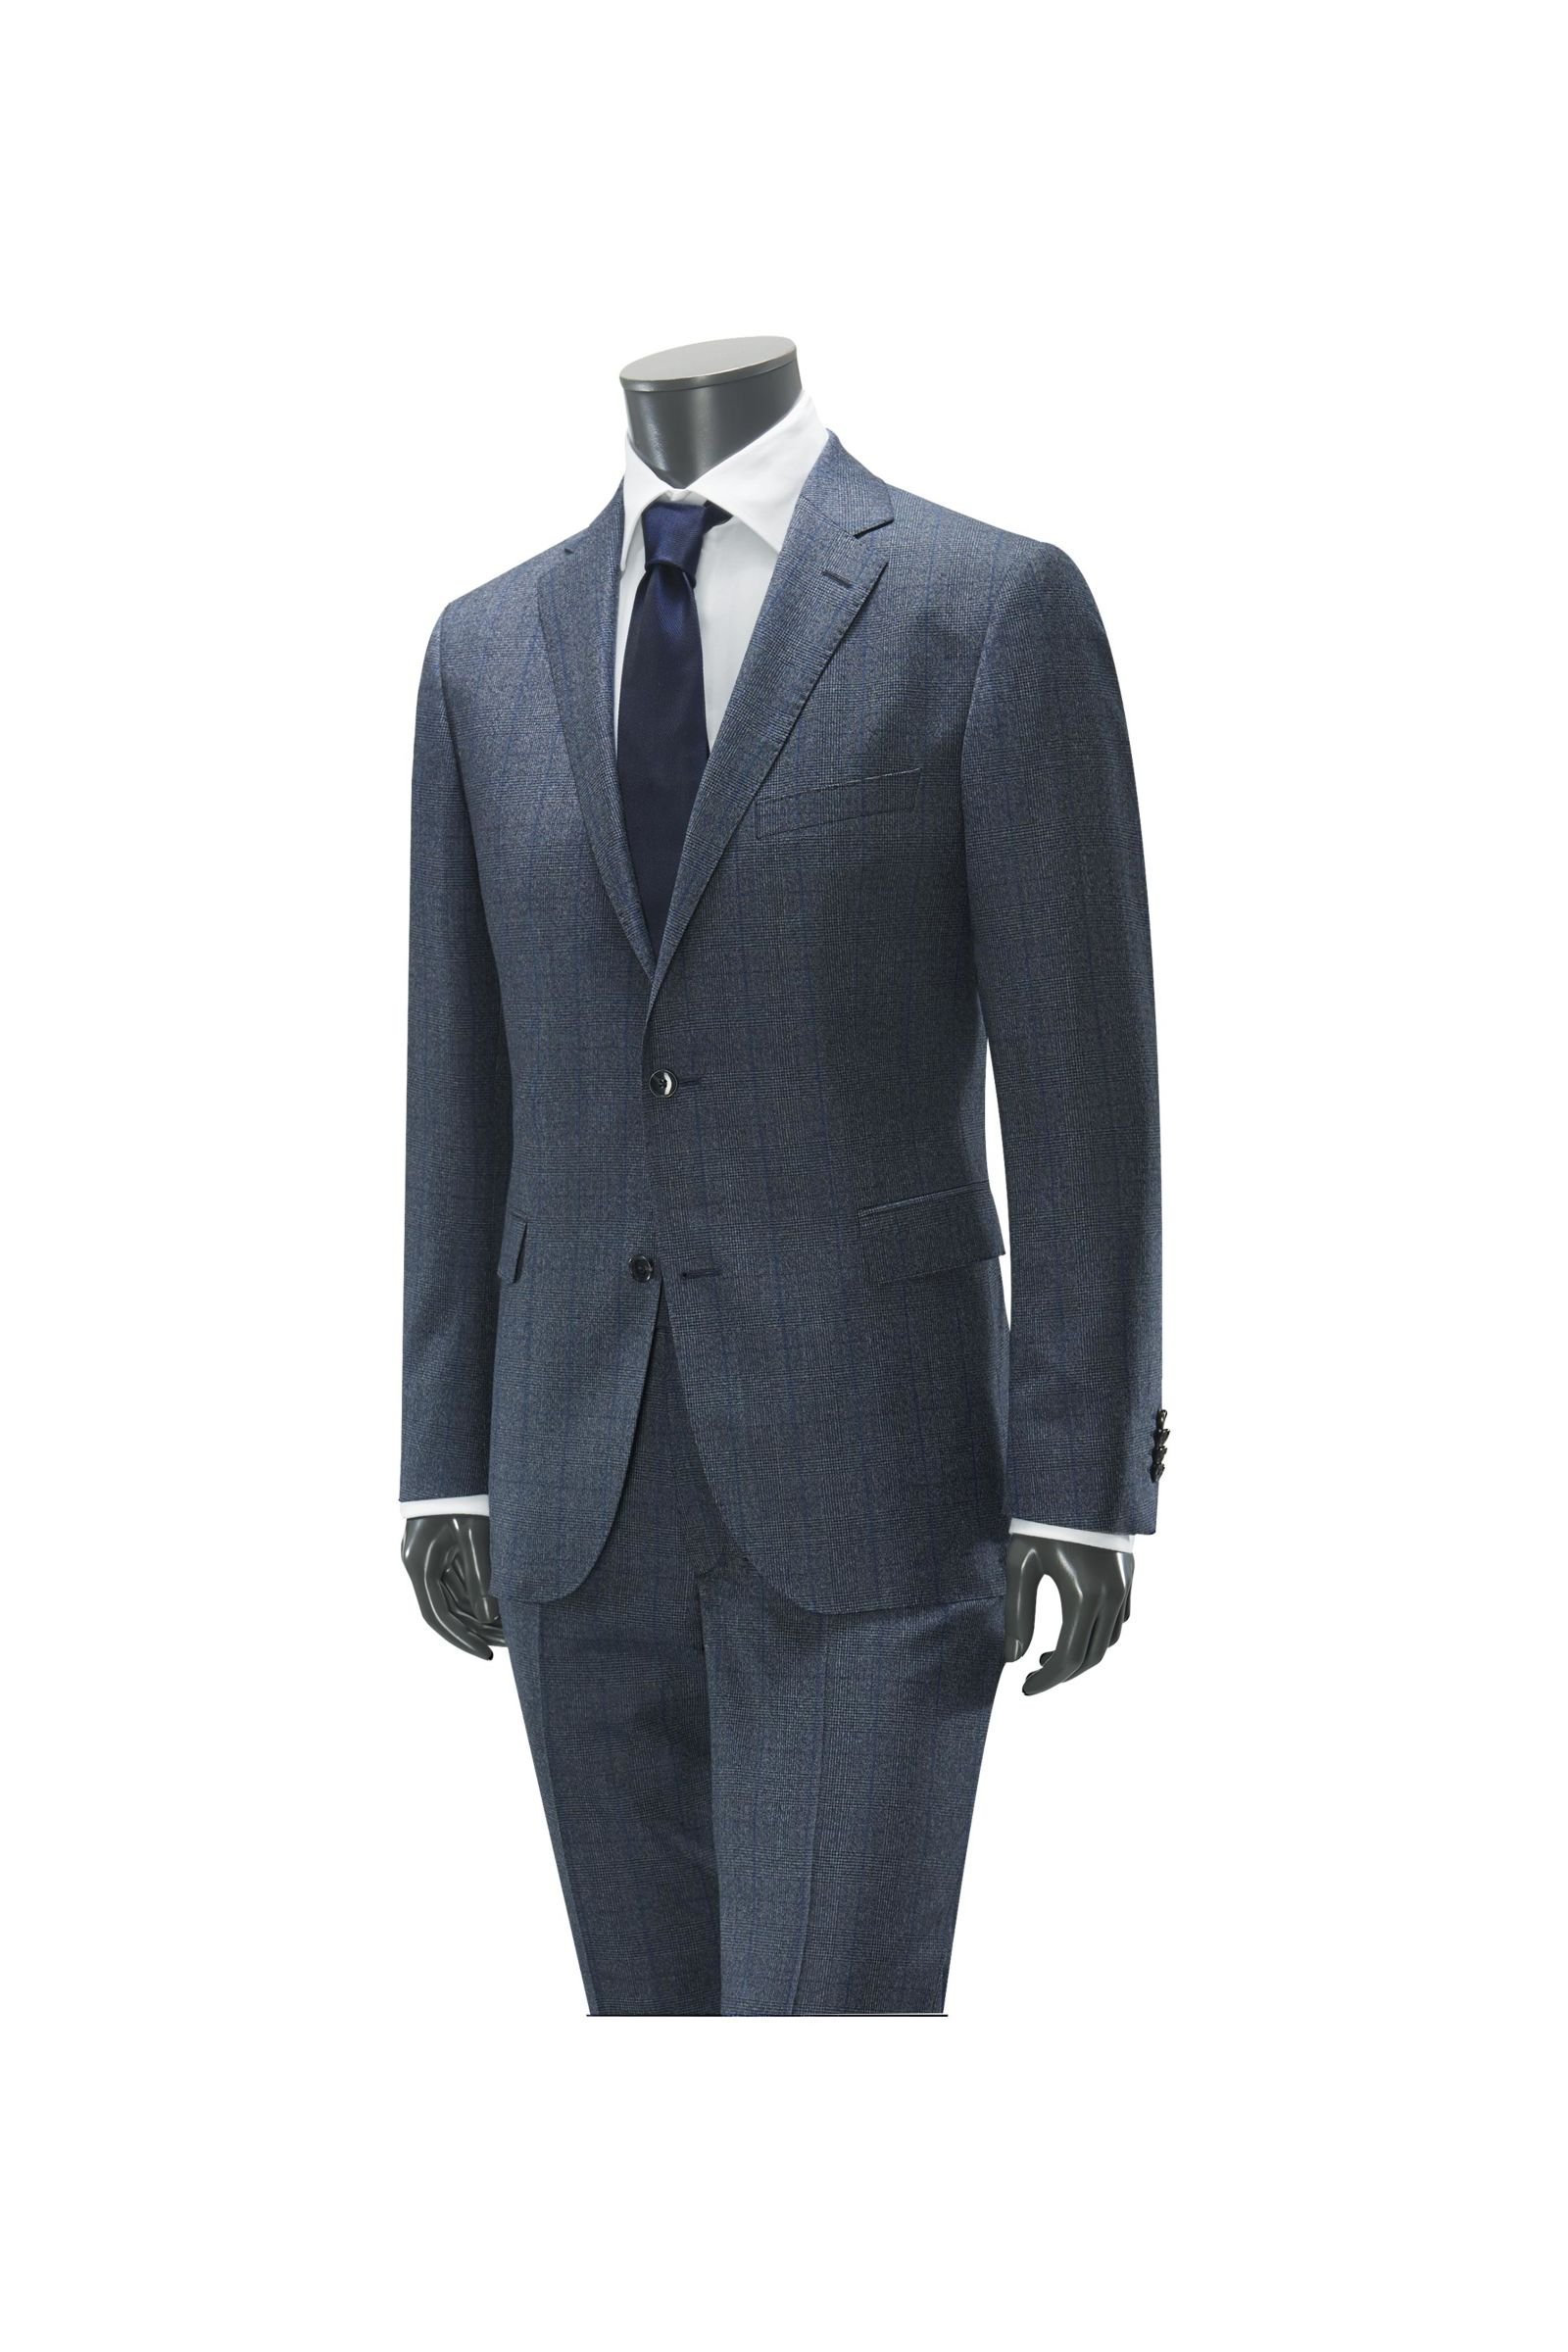 Suit 'Sean Jeff' grey-blue, checked